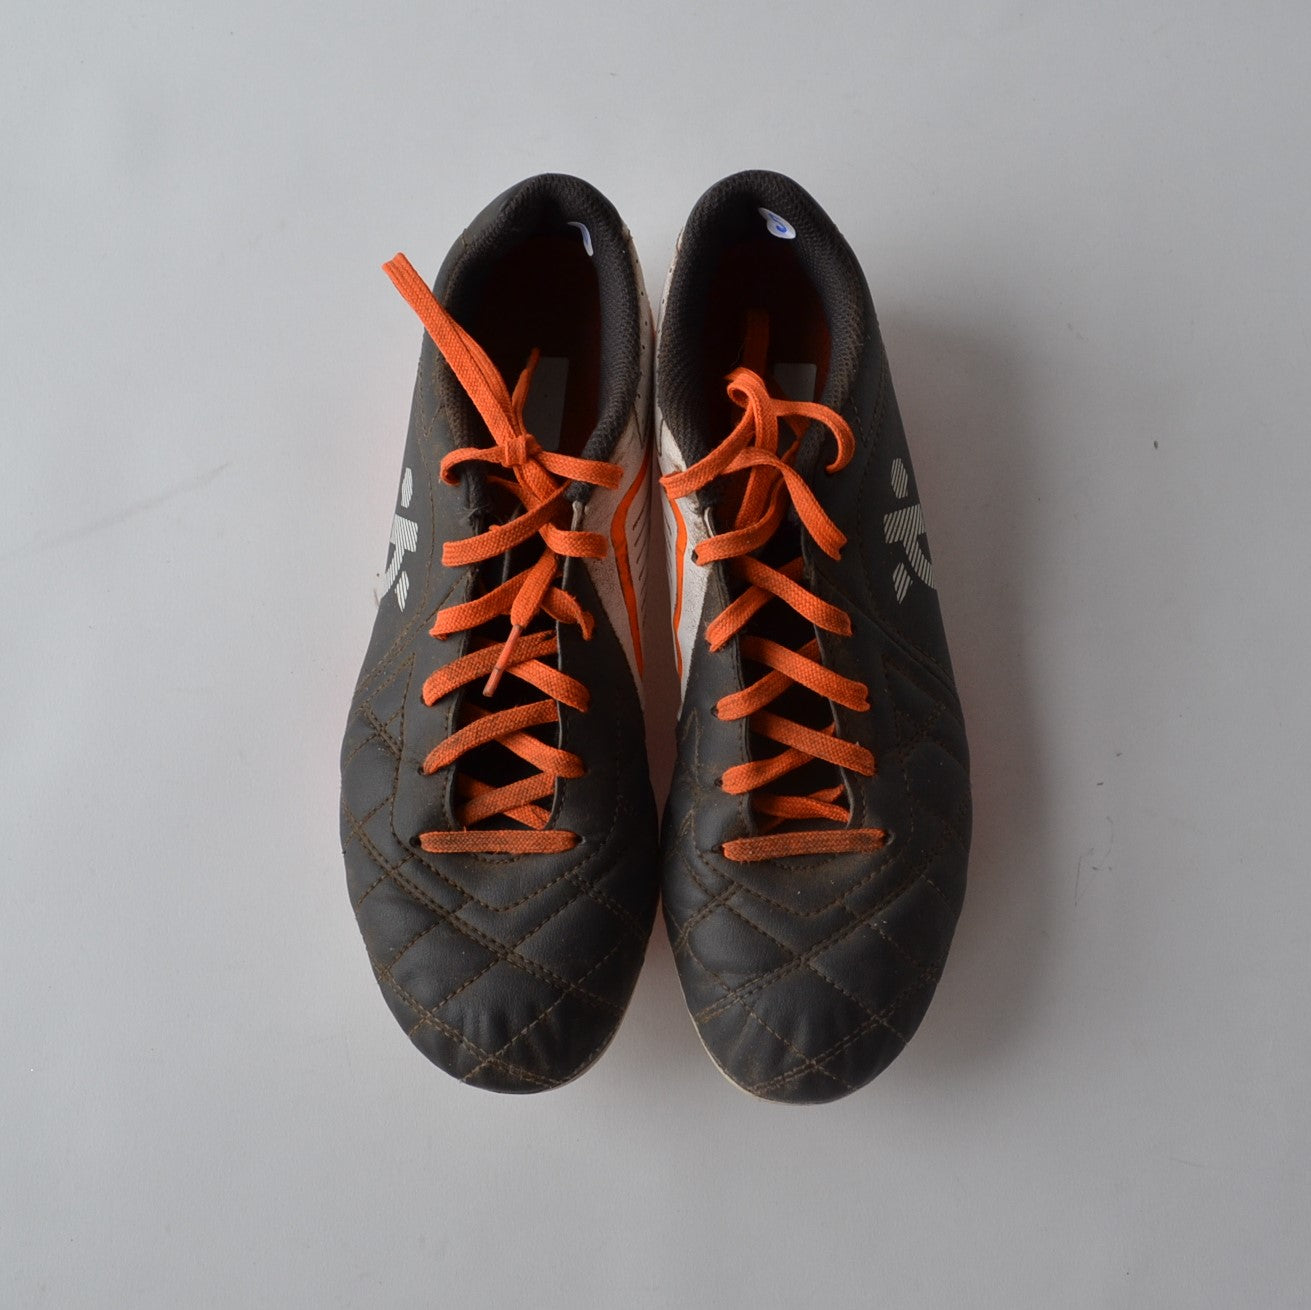 Kipsta Black and Orange Football Boots Size 5